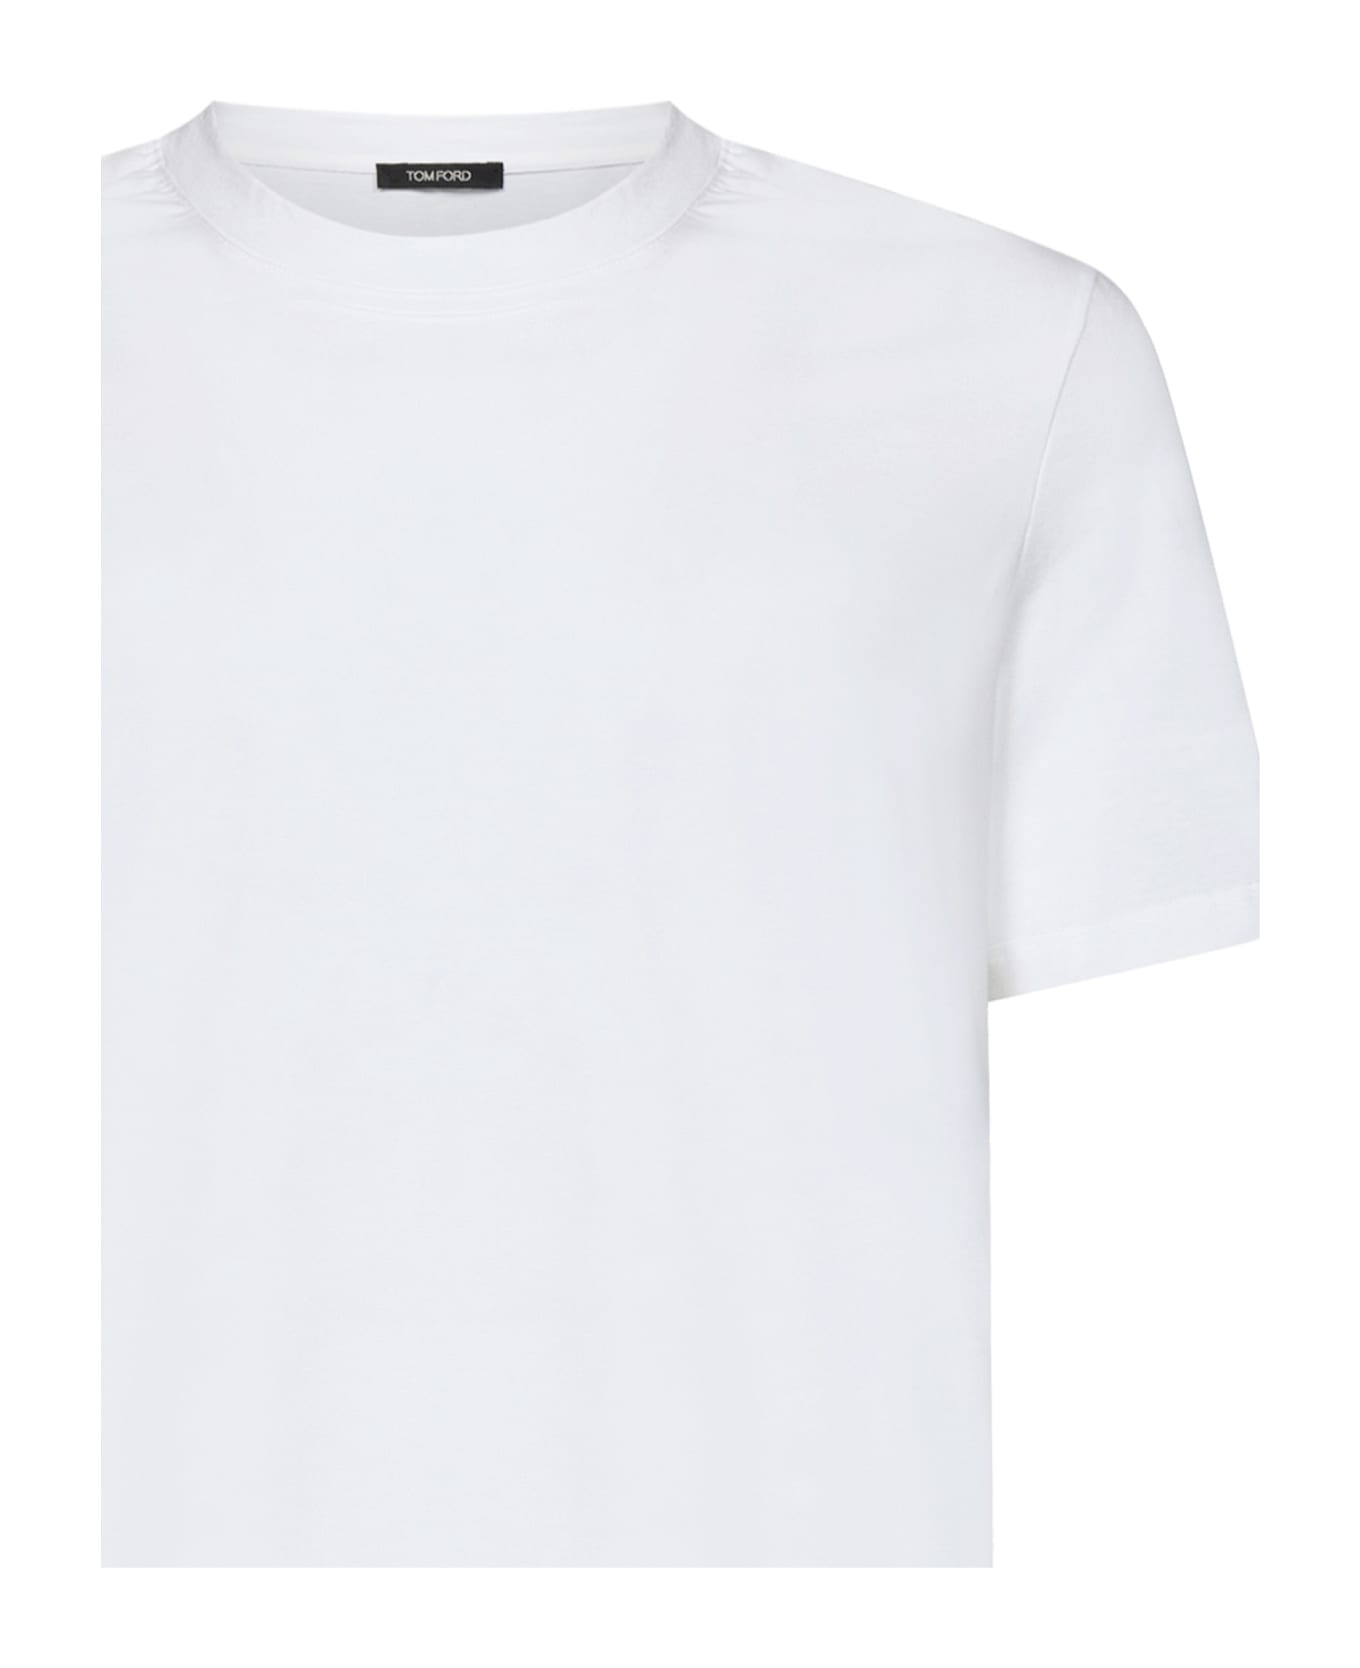 Tom Ford T-shirt - WHITE シャツ